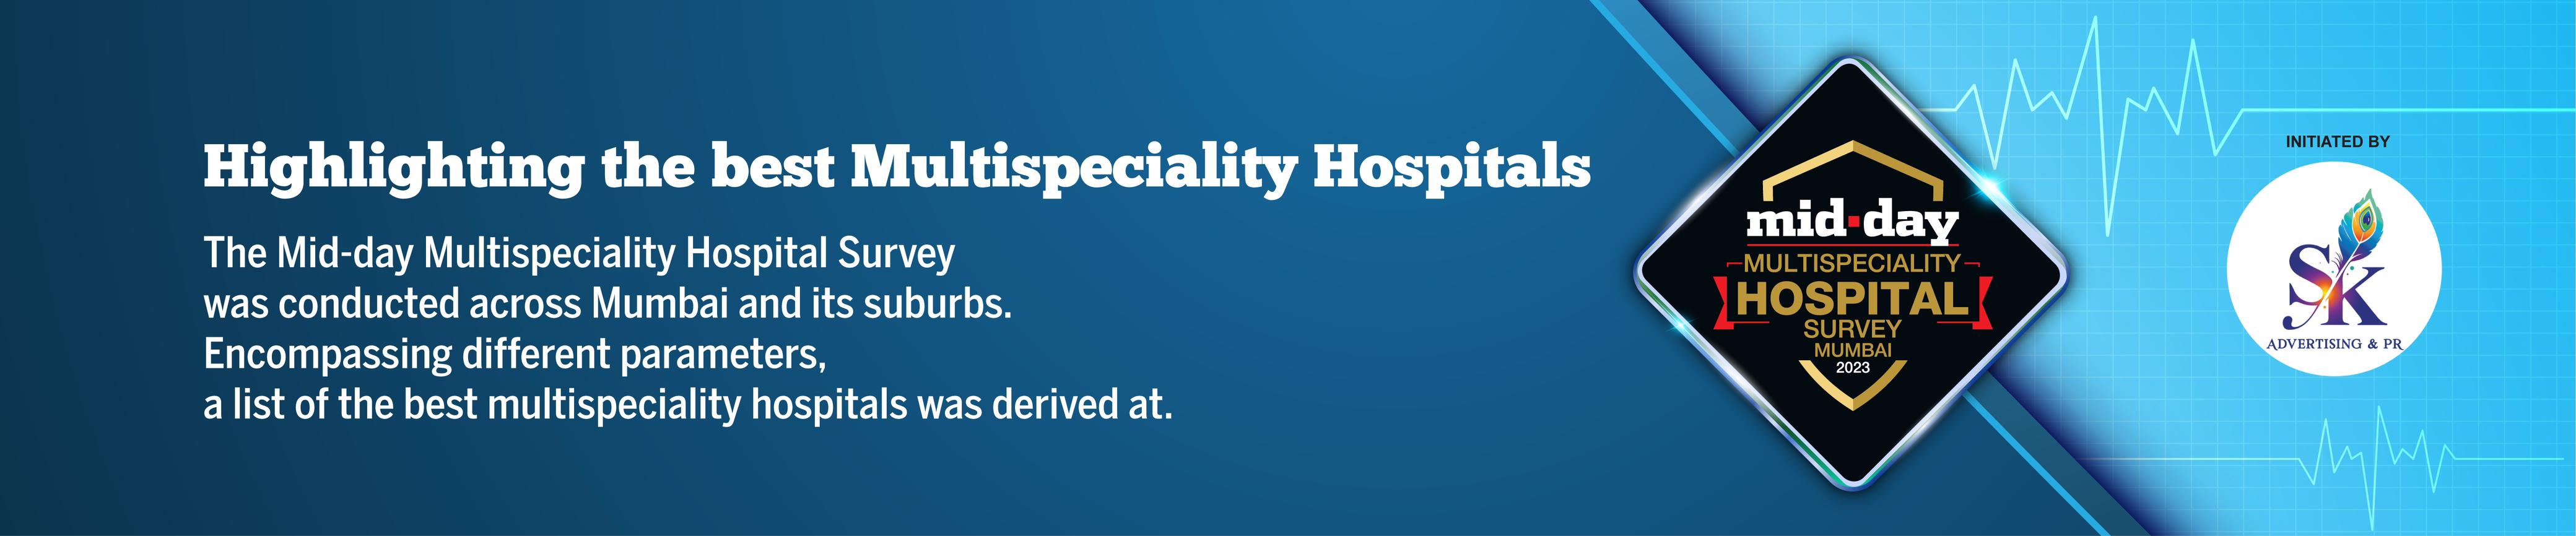 Multispeciality Hospital Desktop Banner